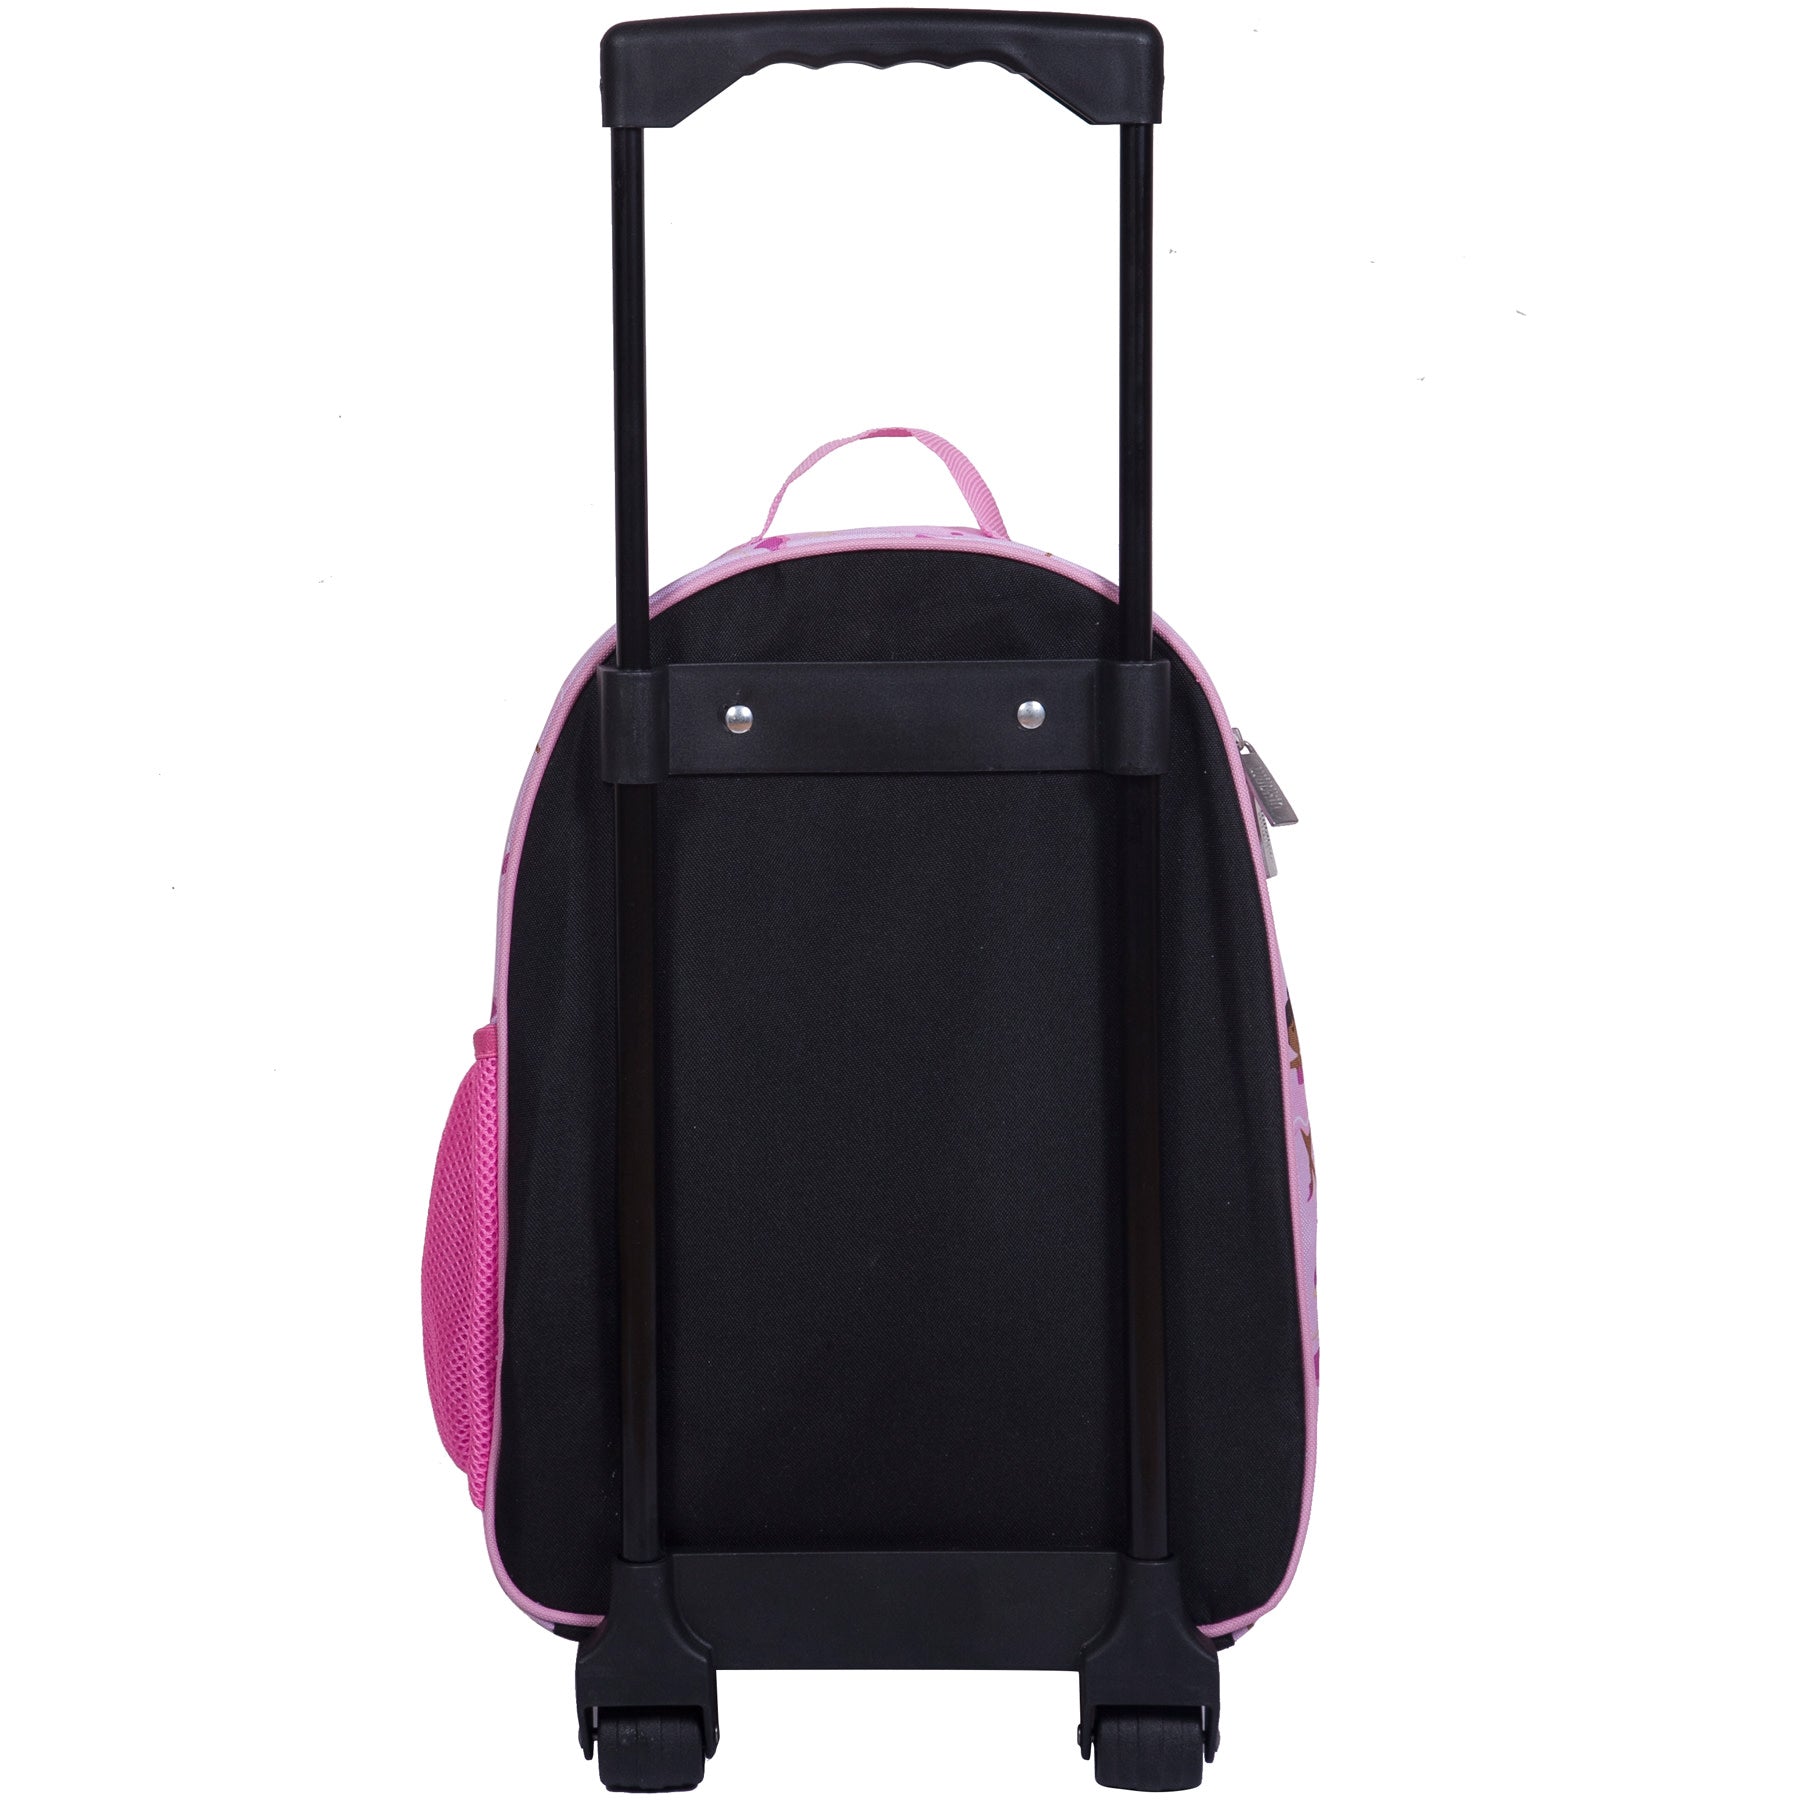 Wildkin Kids Rolling Luggage|Kids Luggage|Suitcase for Kids-Ballerina